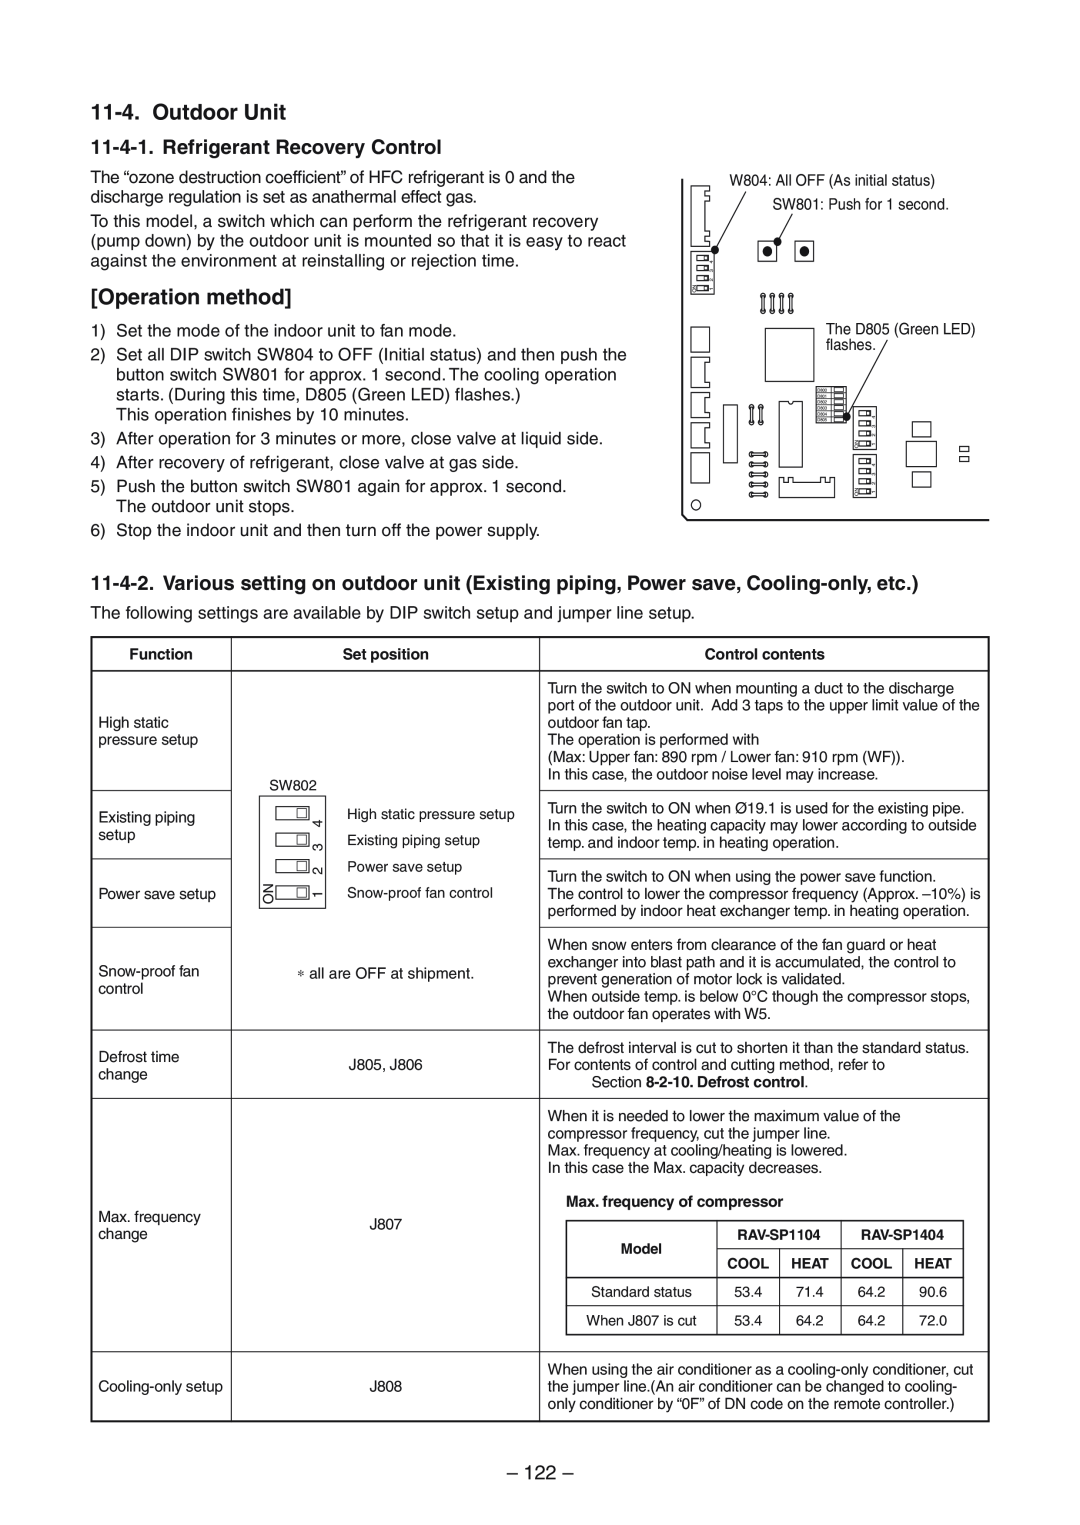 Toshiba RAV-SM804UT-E, RAV-SM1404UT-E, RAV-SM1104UT-E Outdoor Unit, Operation method, Refrigerant Recovery Control, 122 